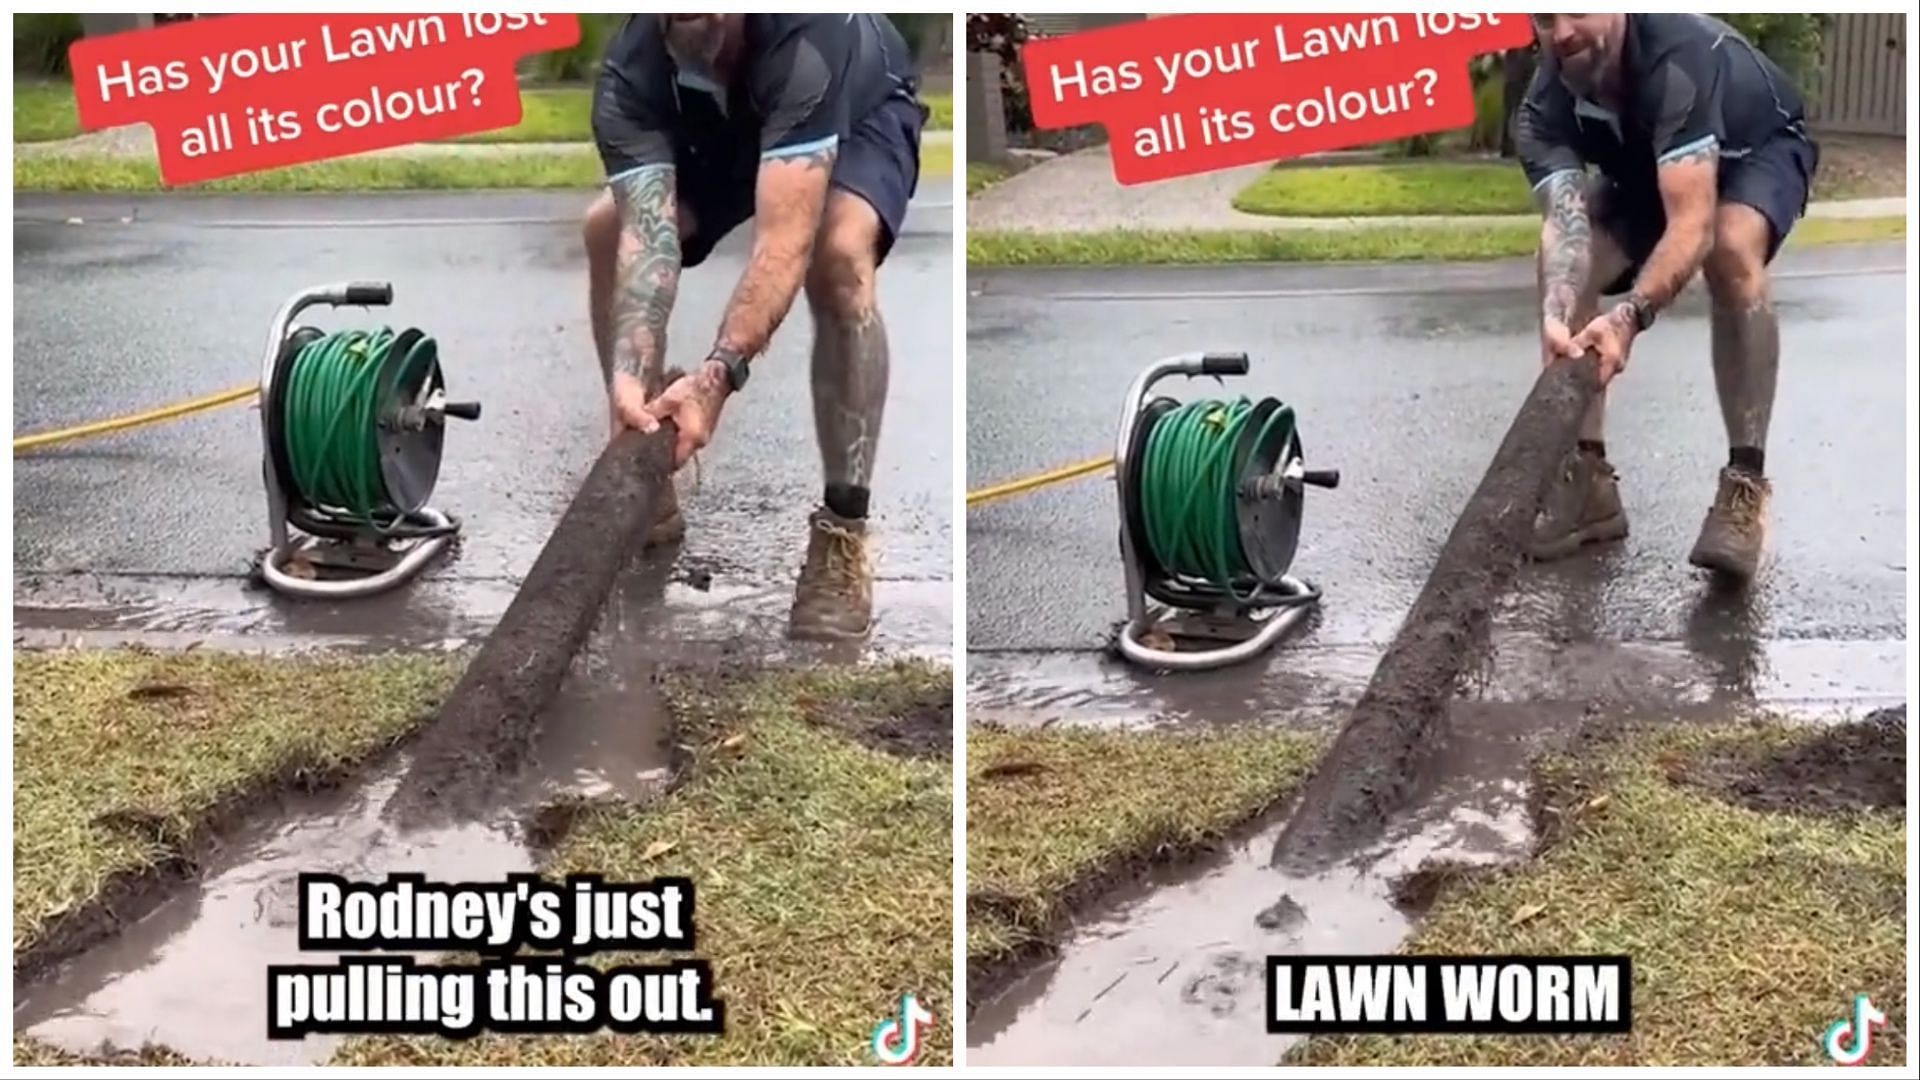 The giant lawn worm video has been circulating around social media platforms (Image via Twitter/ SkinnyTuna)